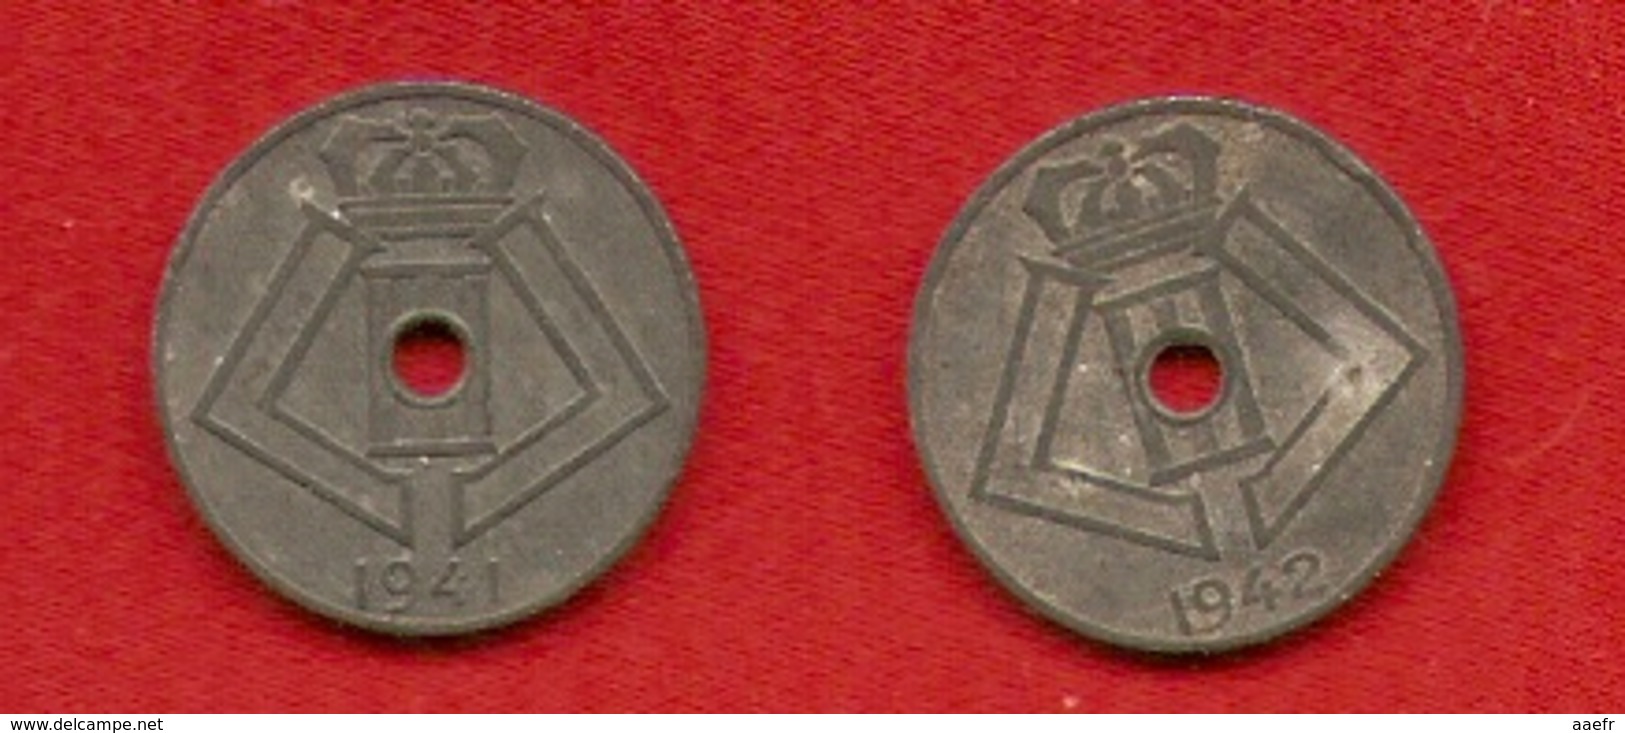 Belgique - 5 Centimes Léopold III - 2 Monnaies - 1941 FR, 1942 NL - 5 Centimes